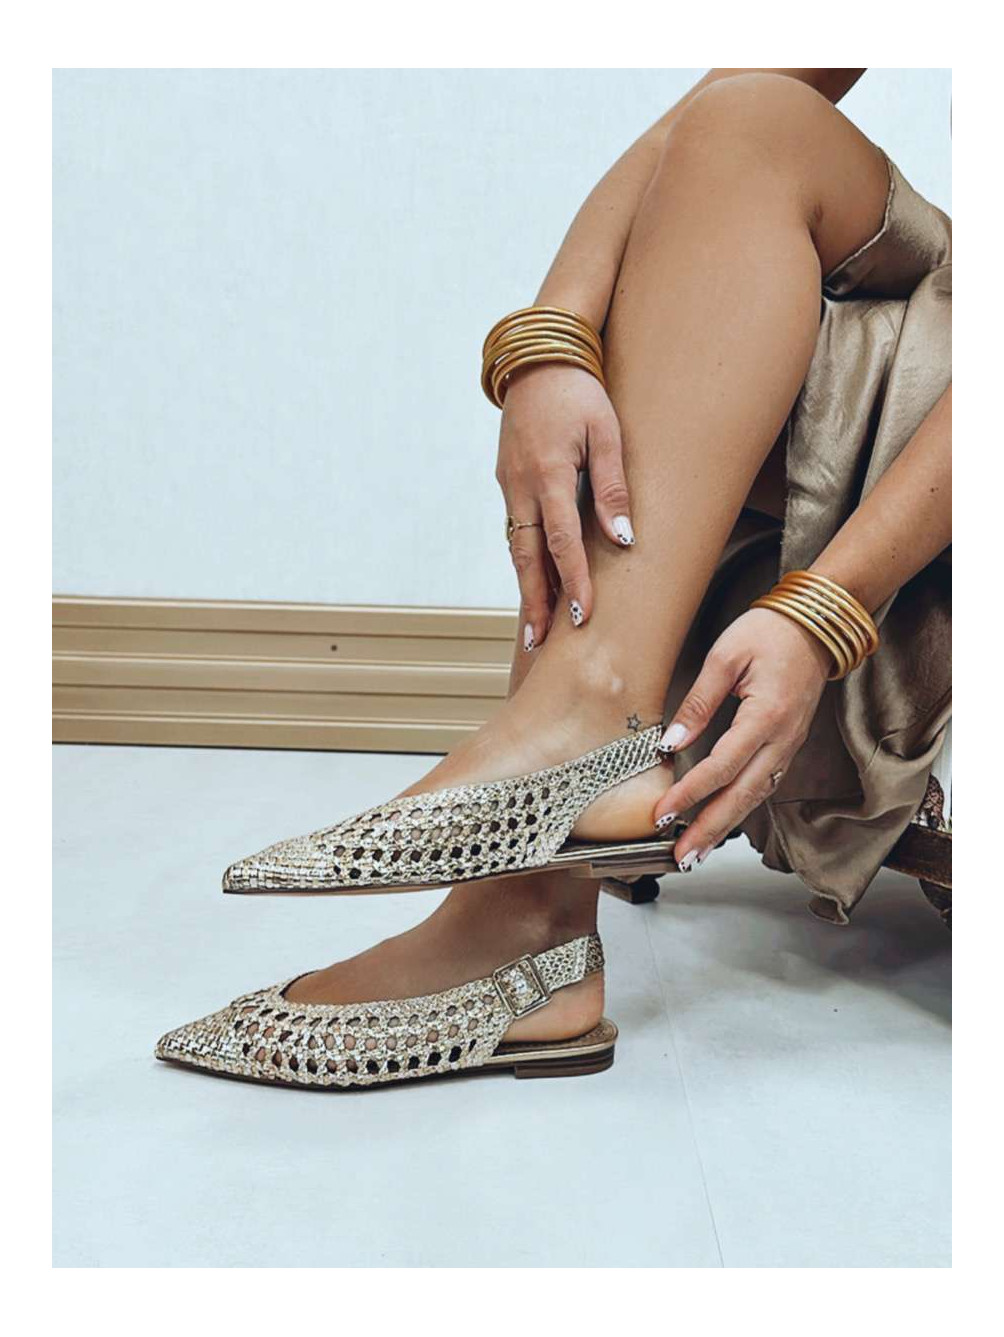 Sandalias Calada Petra en color dorado, zapatos mujer baratos, Mariquita Trasquilá